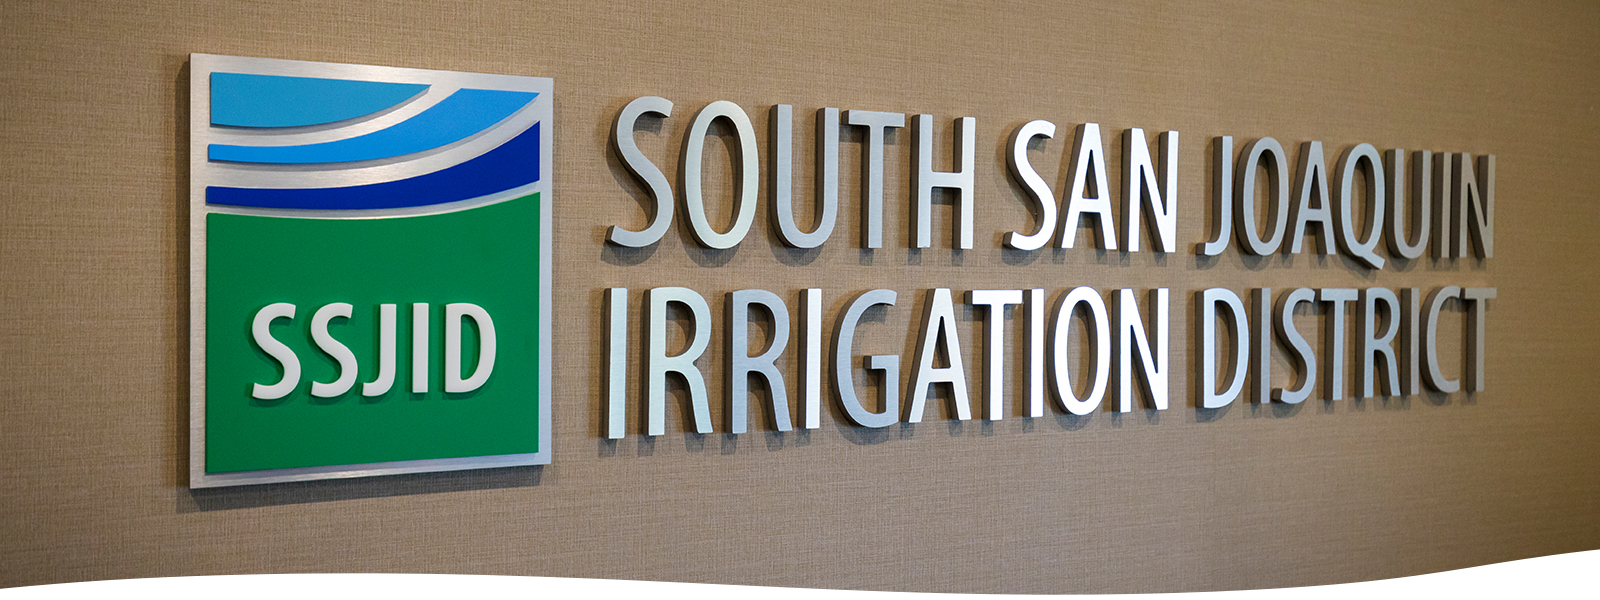 S San Joaquin Irrigation District sign